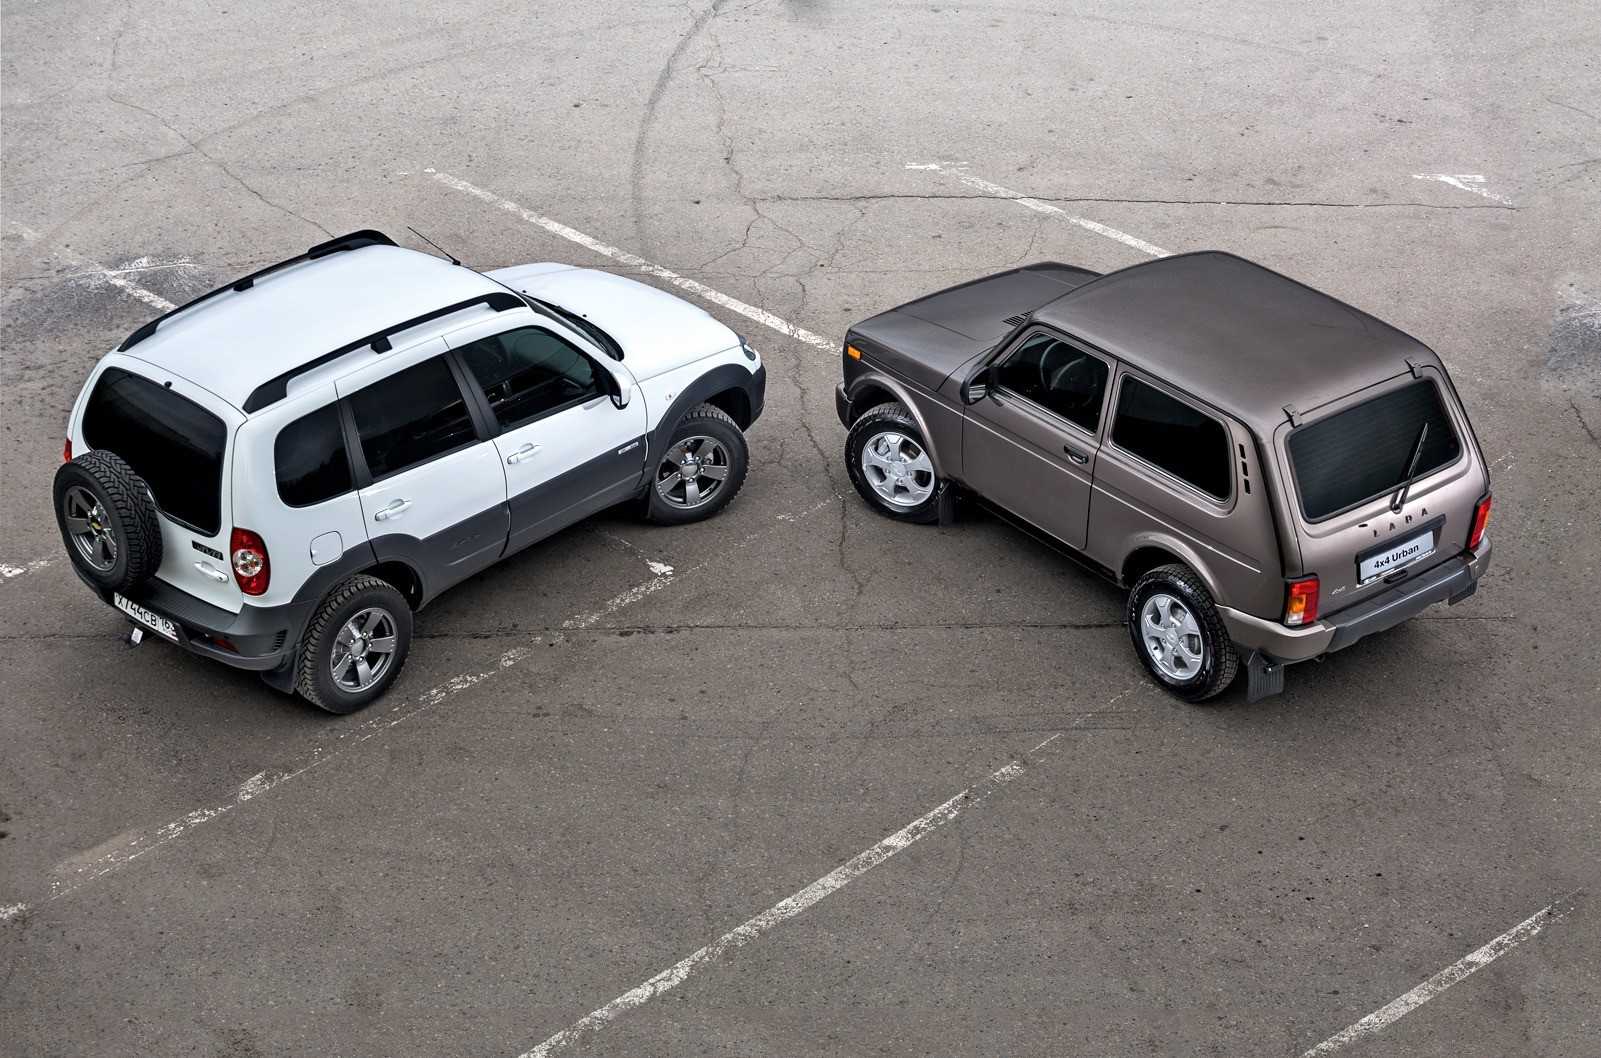 Нива и нива шевроле сравнение. Niva Chevrolet vs Нива.